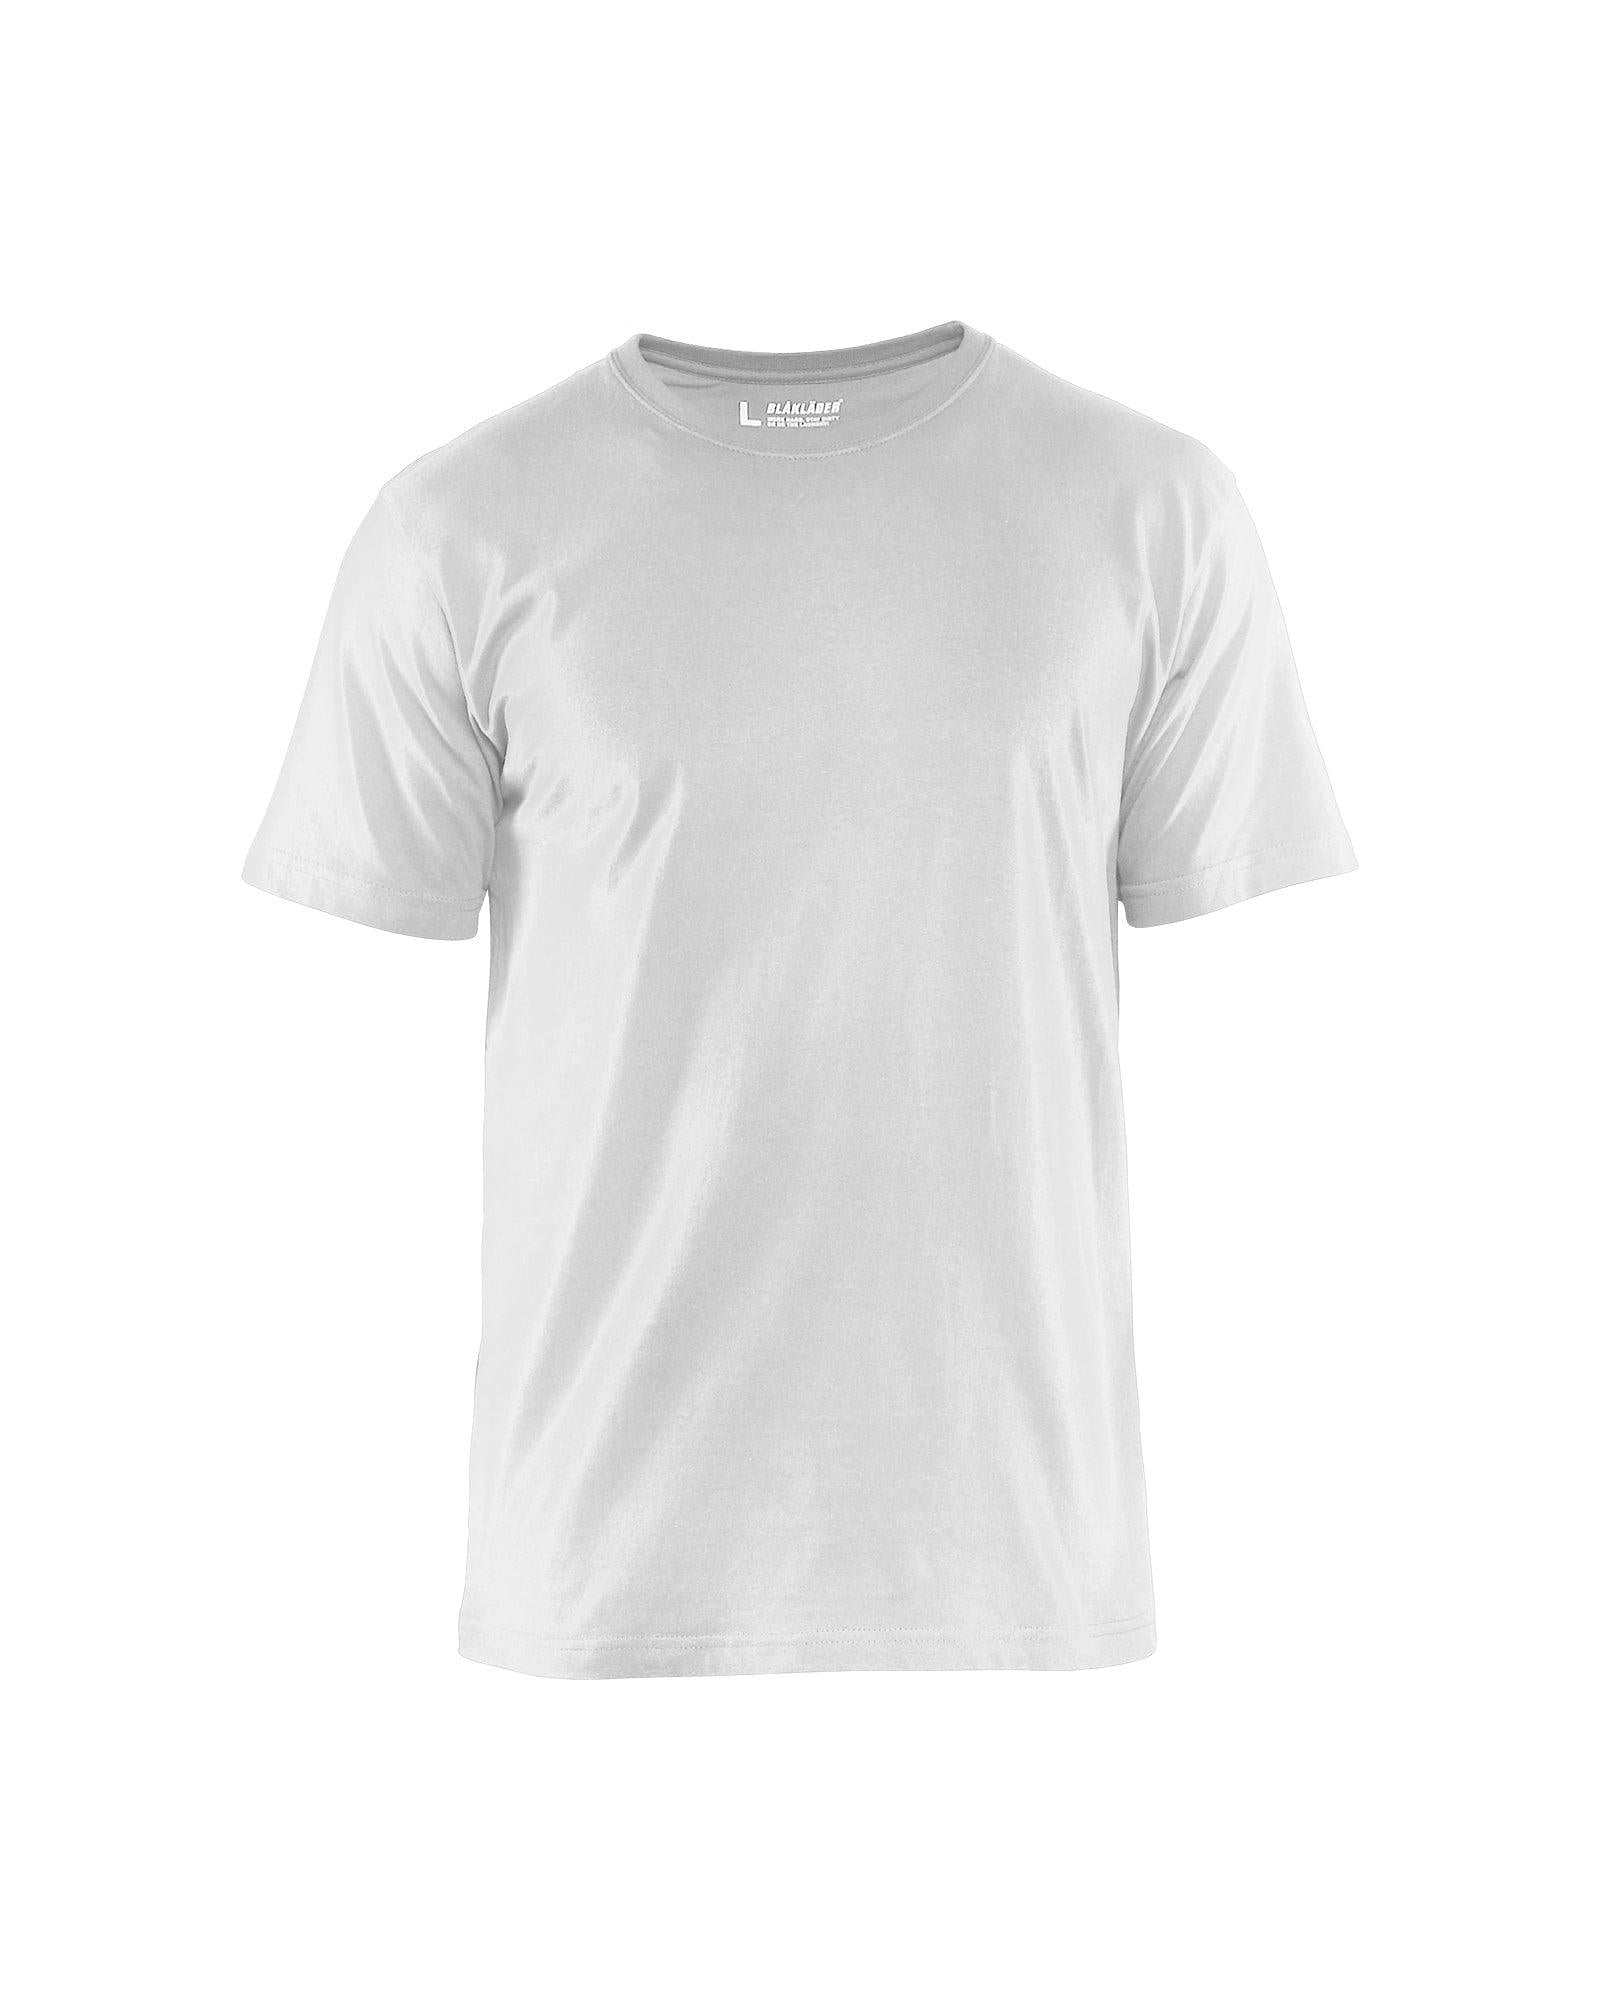 Blaklader 3554 Short Sleeve T-Shirt - White - Trusted Gear Company LLC